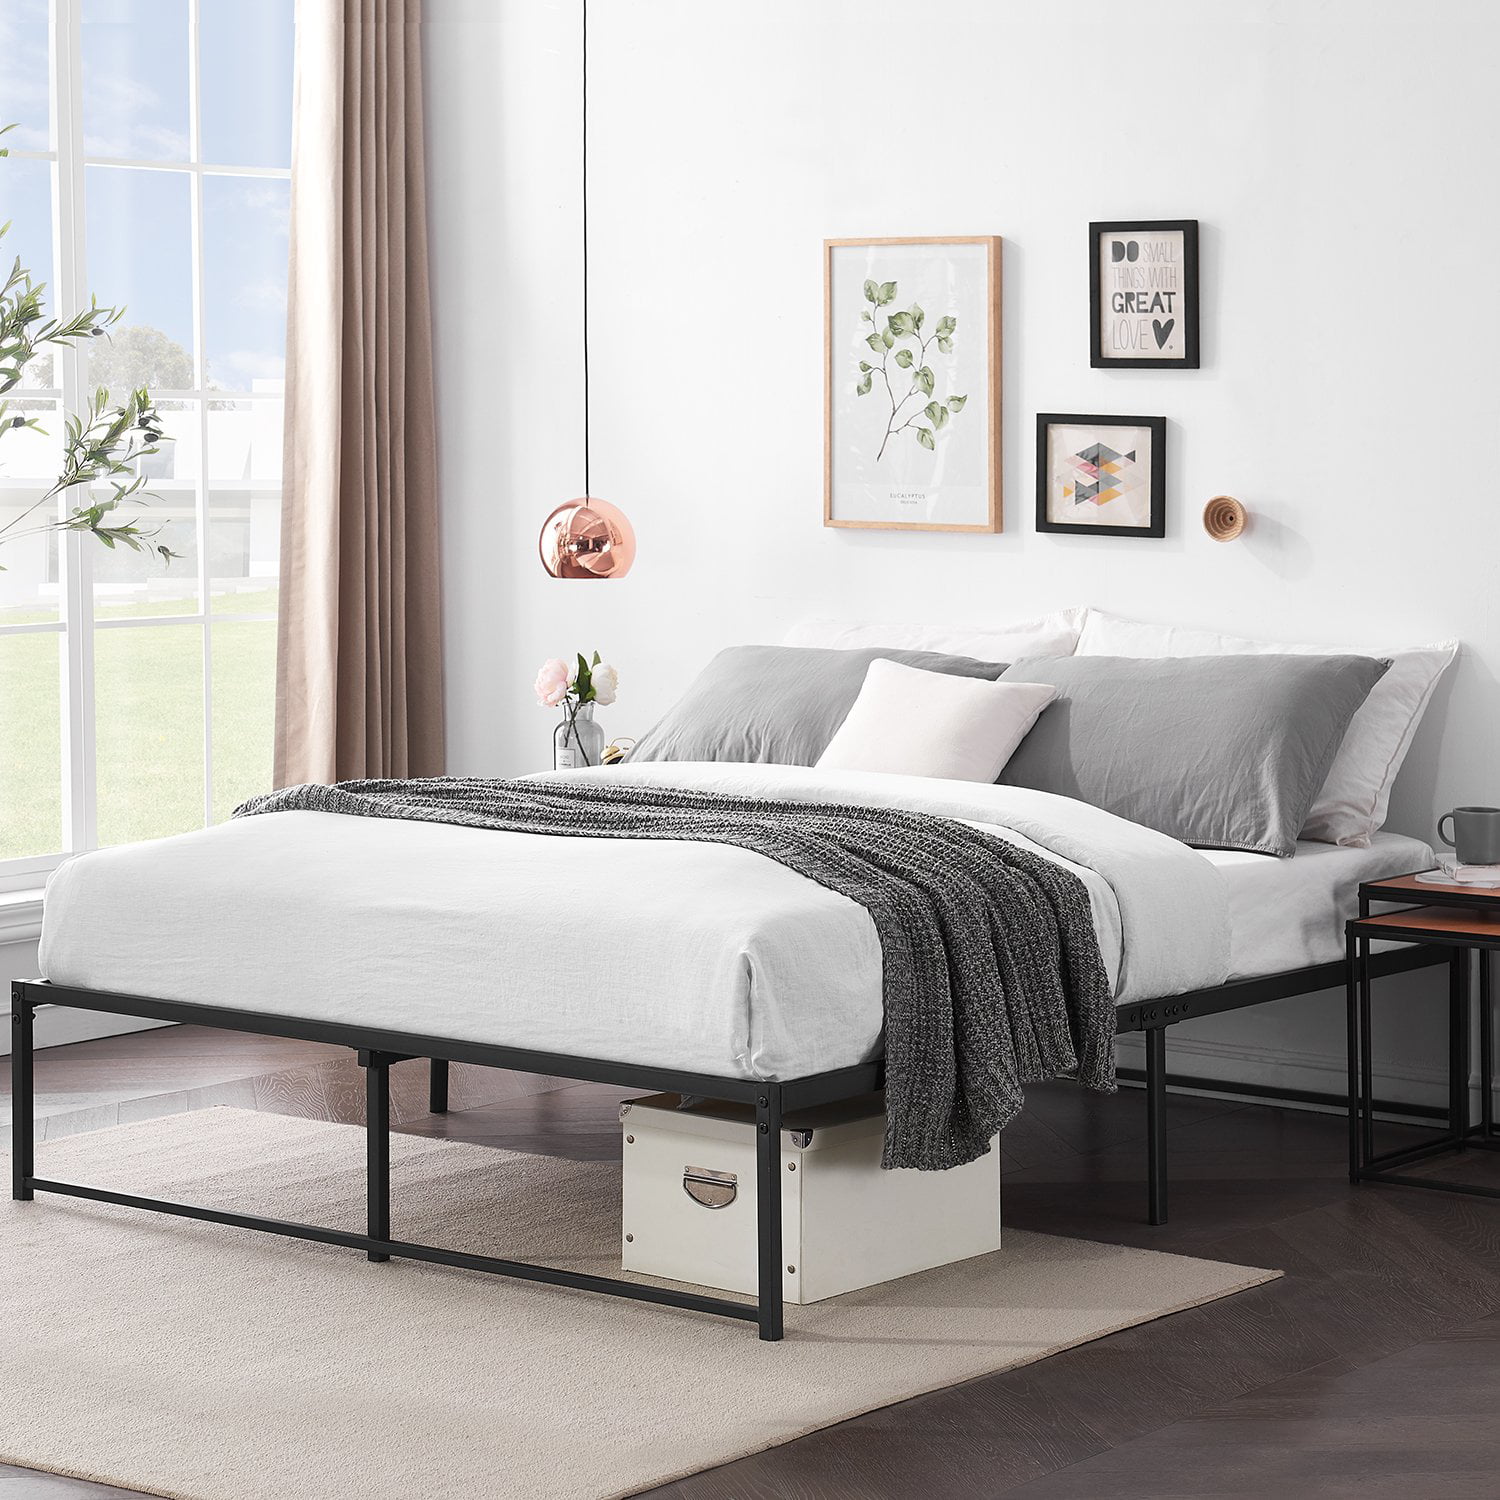 Metal Platform Bed Frame Full Size With, Platform Bed With Storage No Headboard